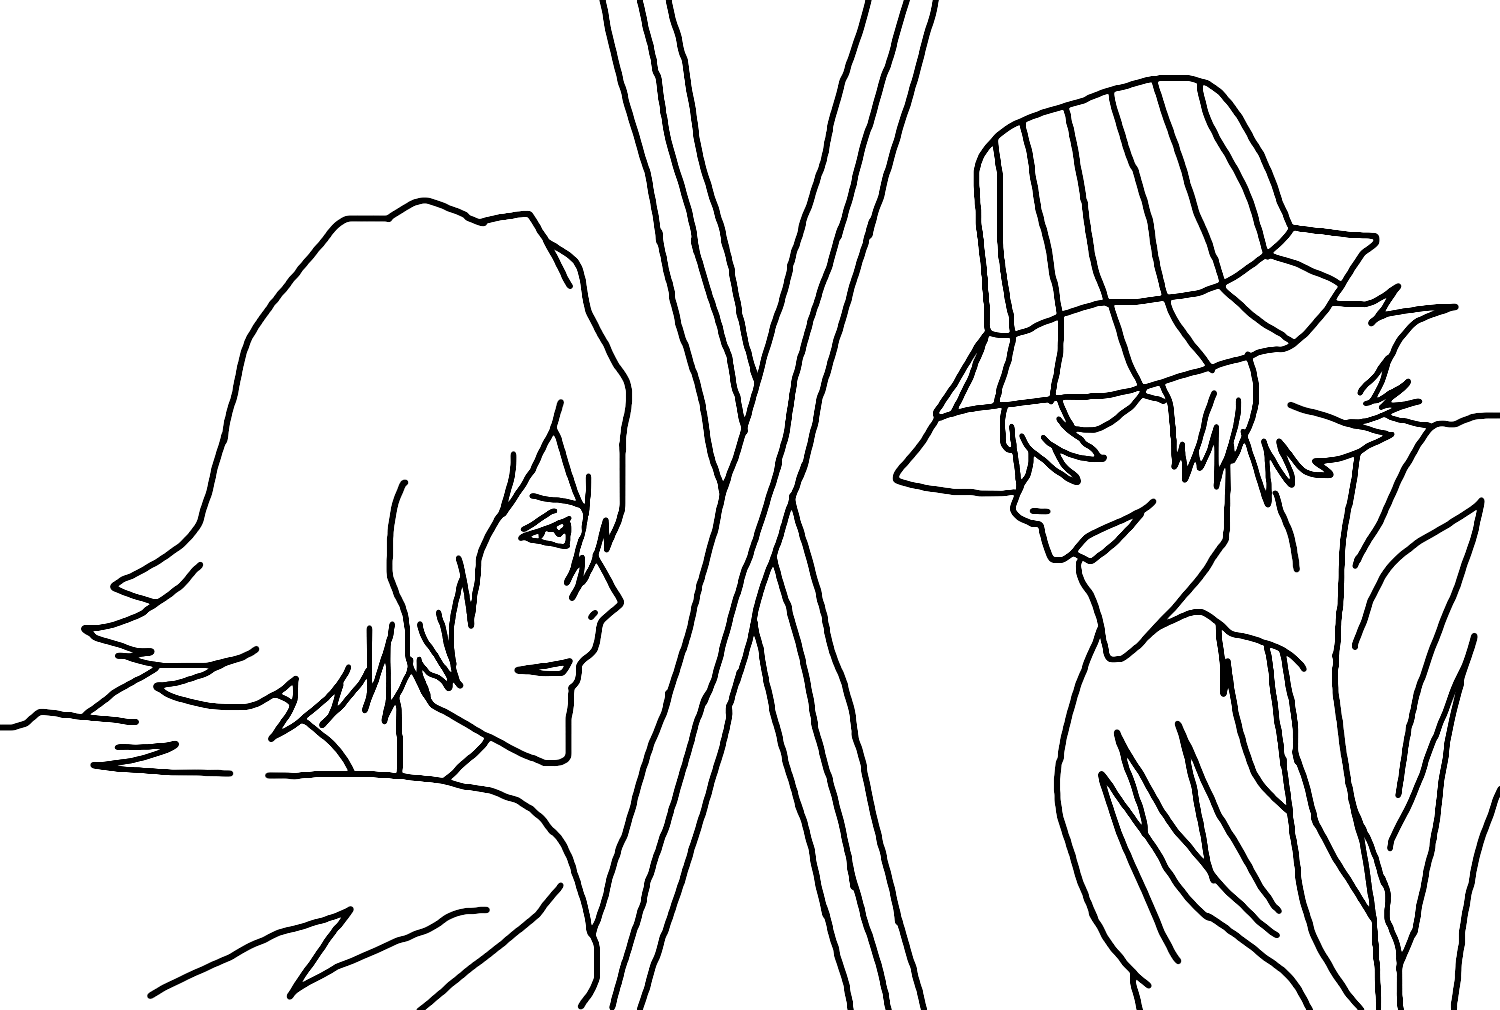 Urahara versus Reigai kleurplaat van Kisuke Urahara